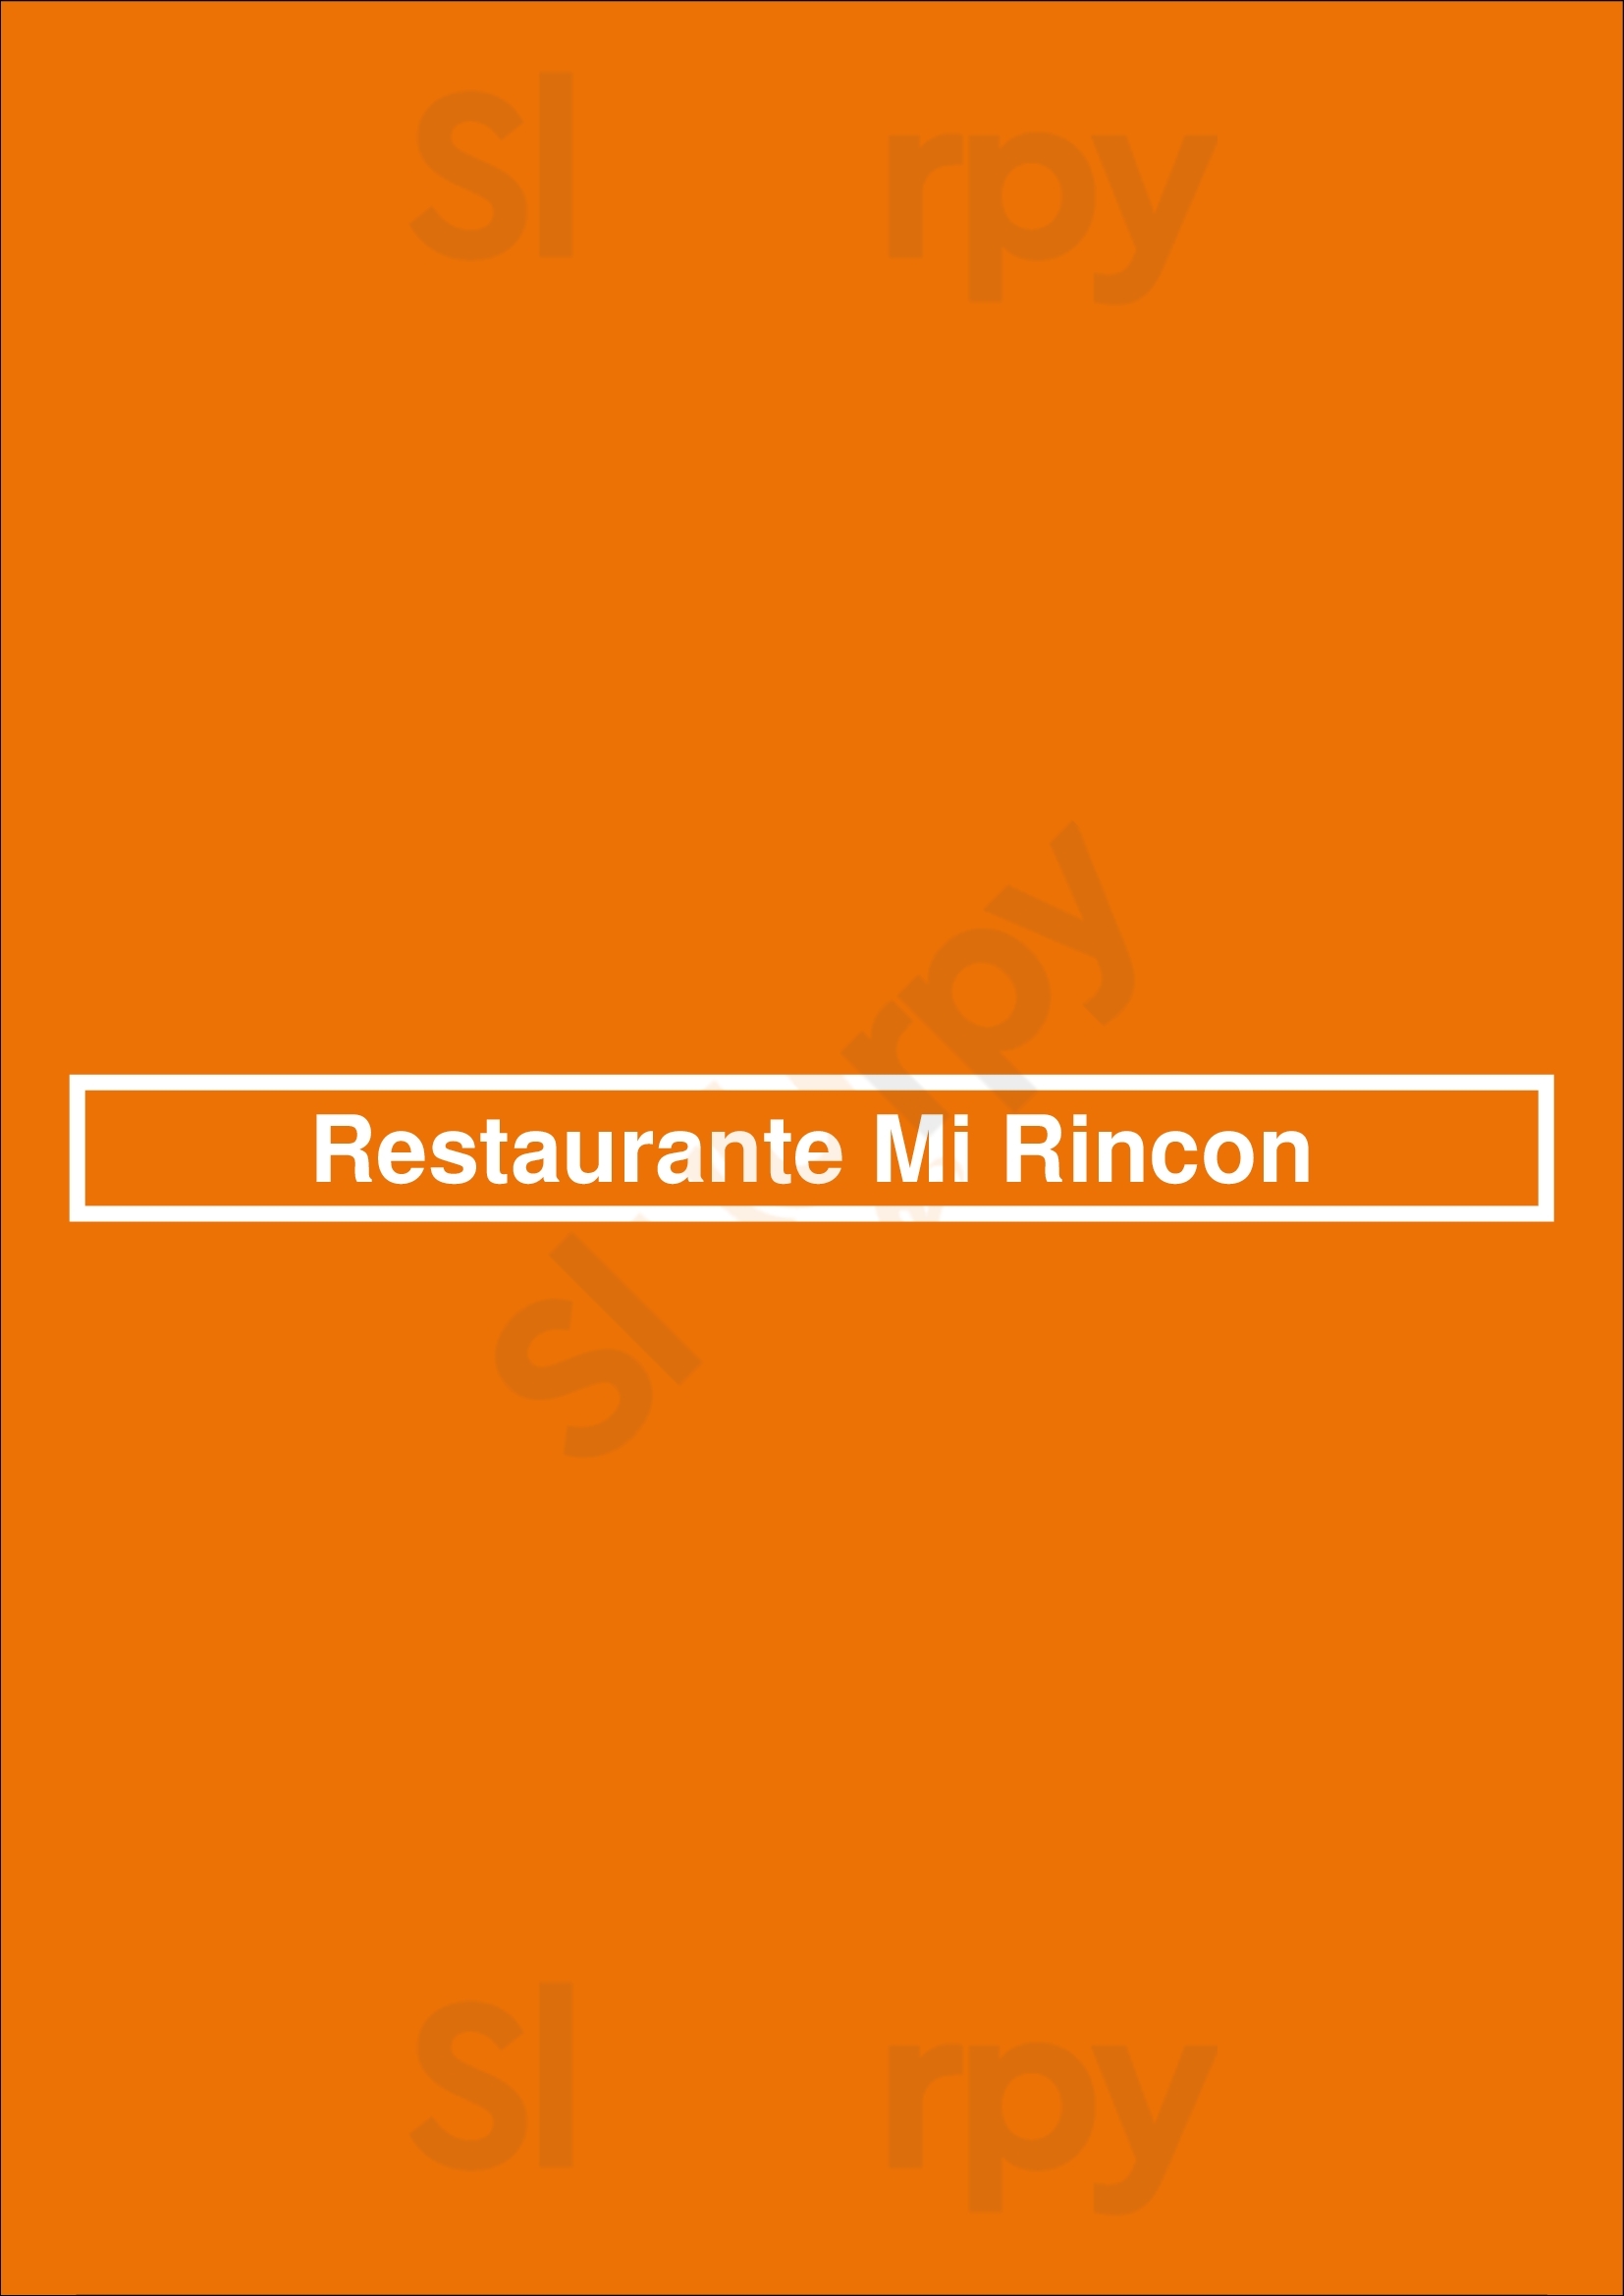 Restaurante Mi Rincon Barcelona Menu - 1